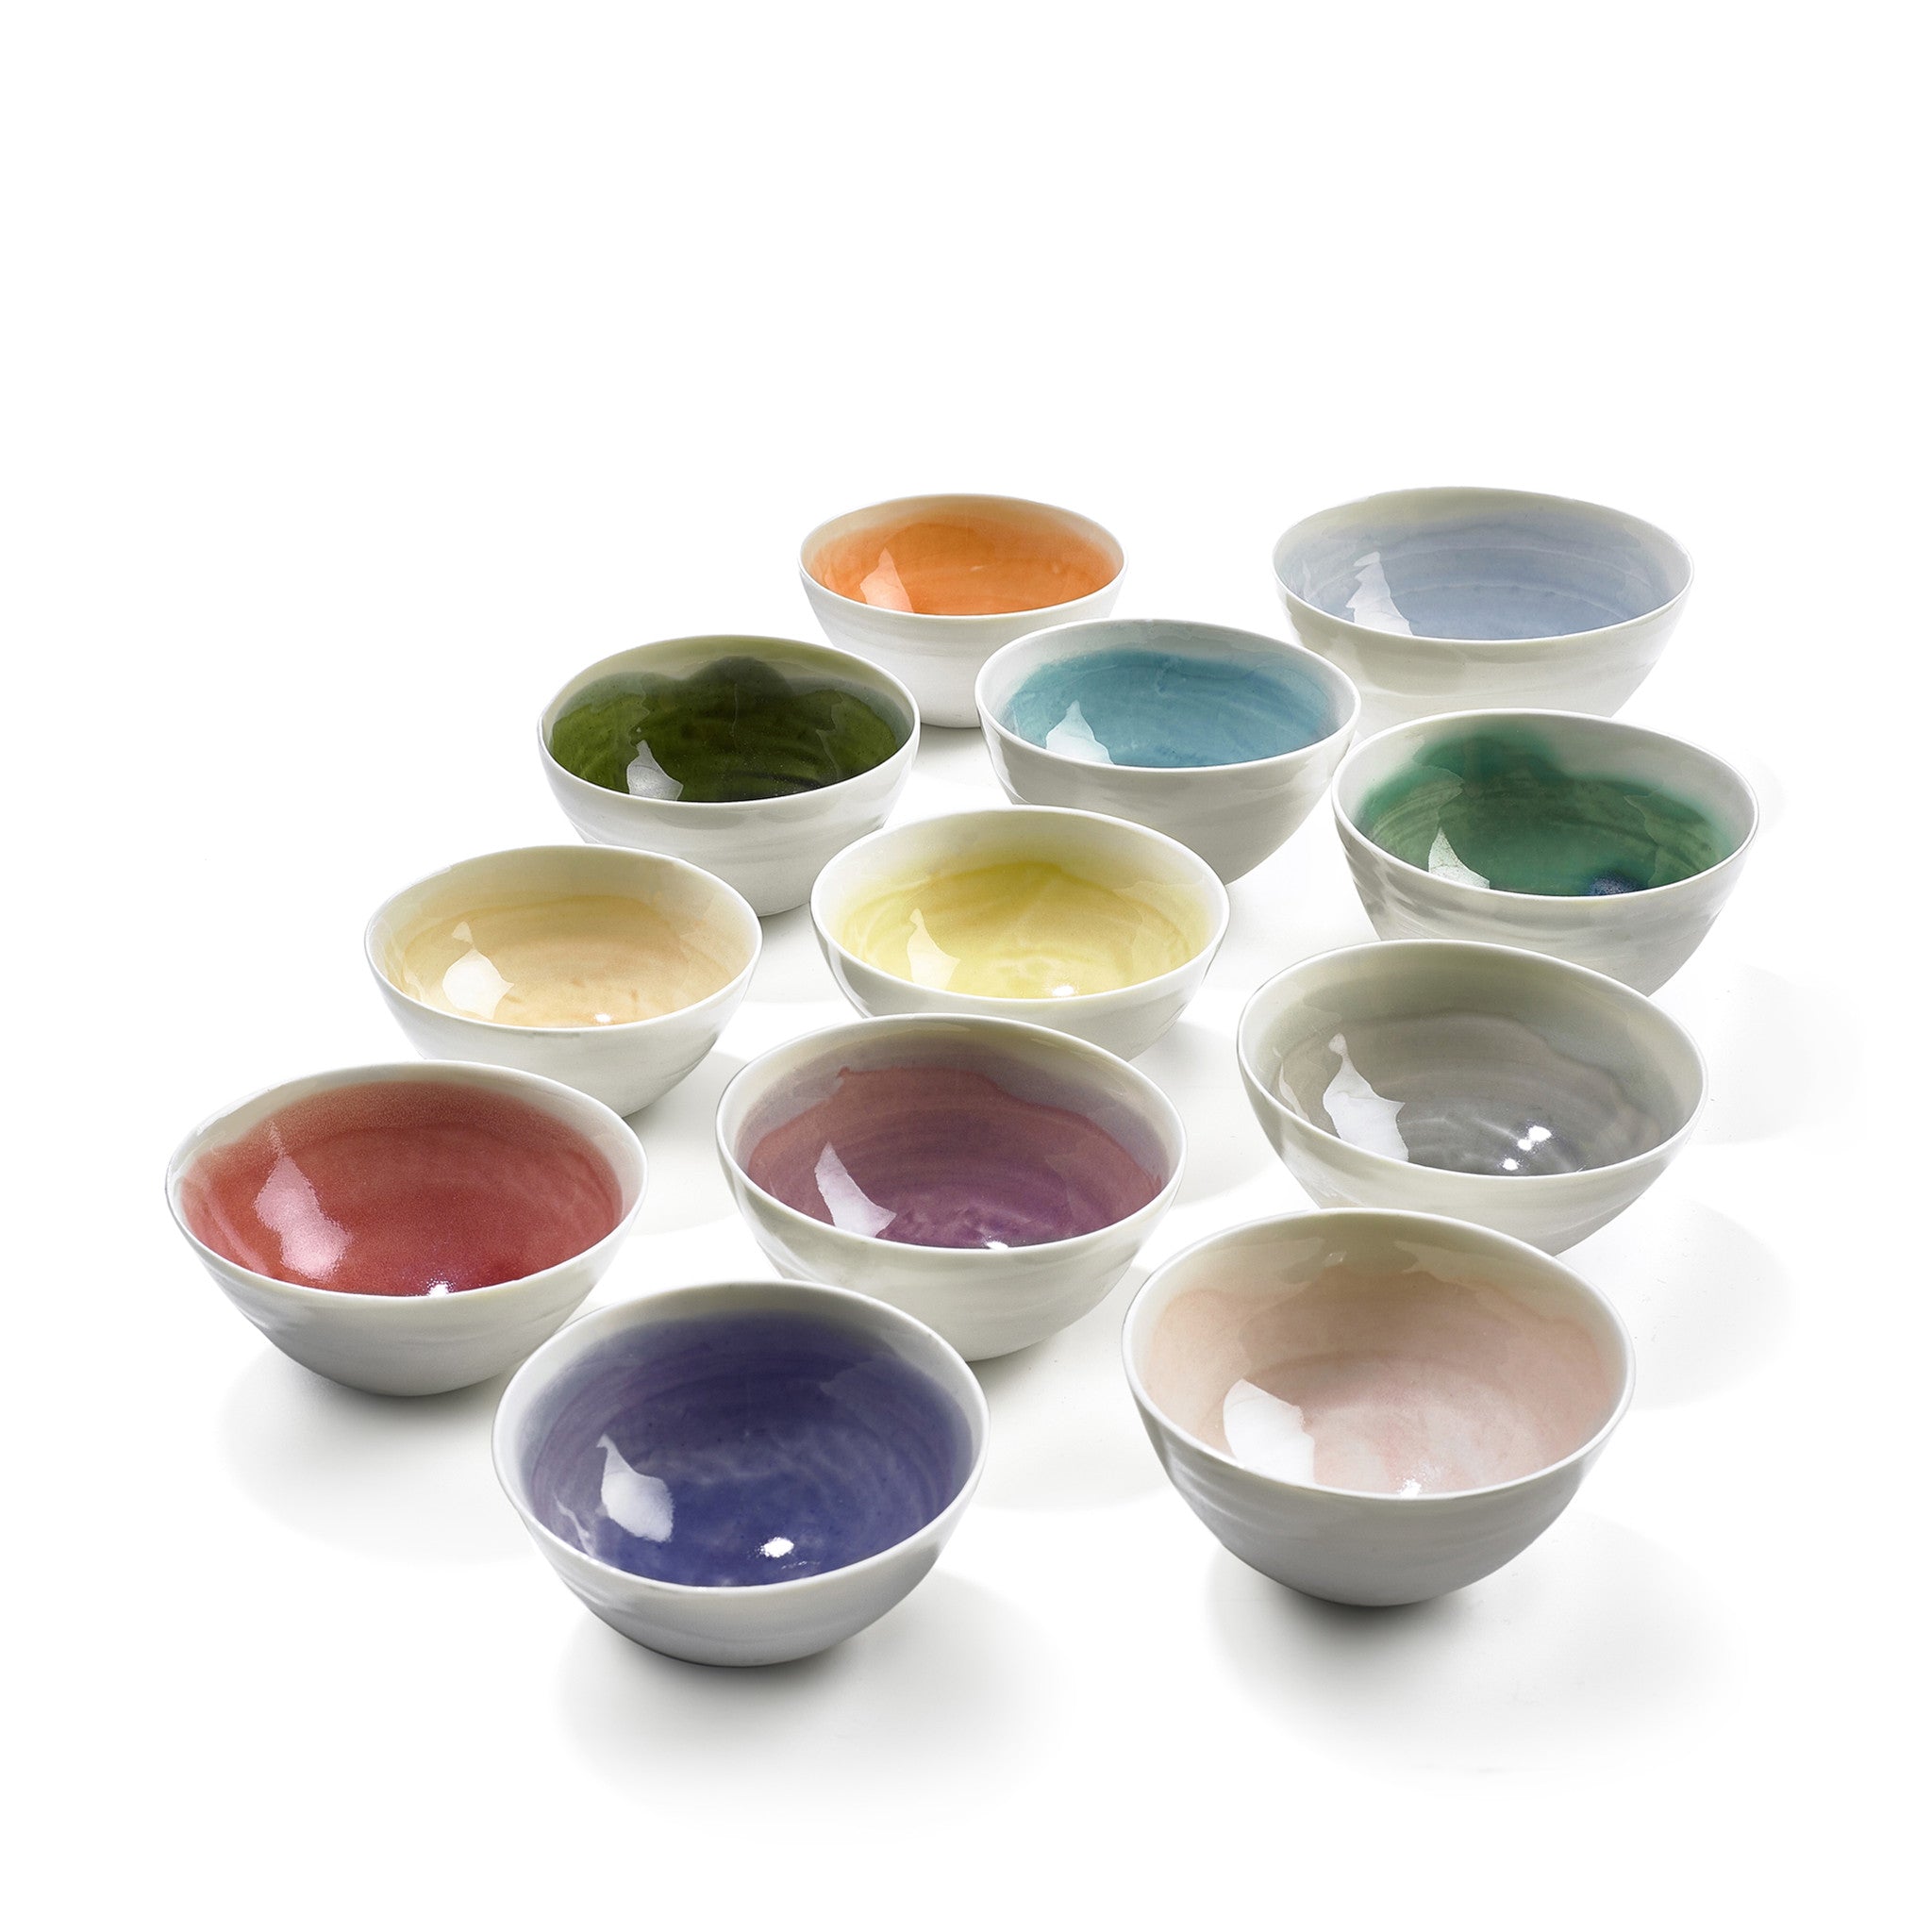 Small Violet Porcelain Bowl with White Edge, 8cm